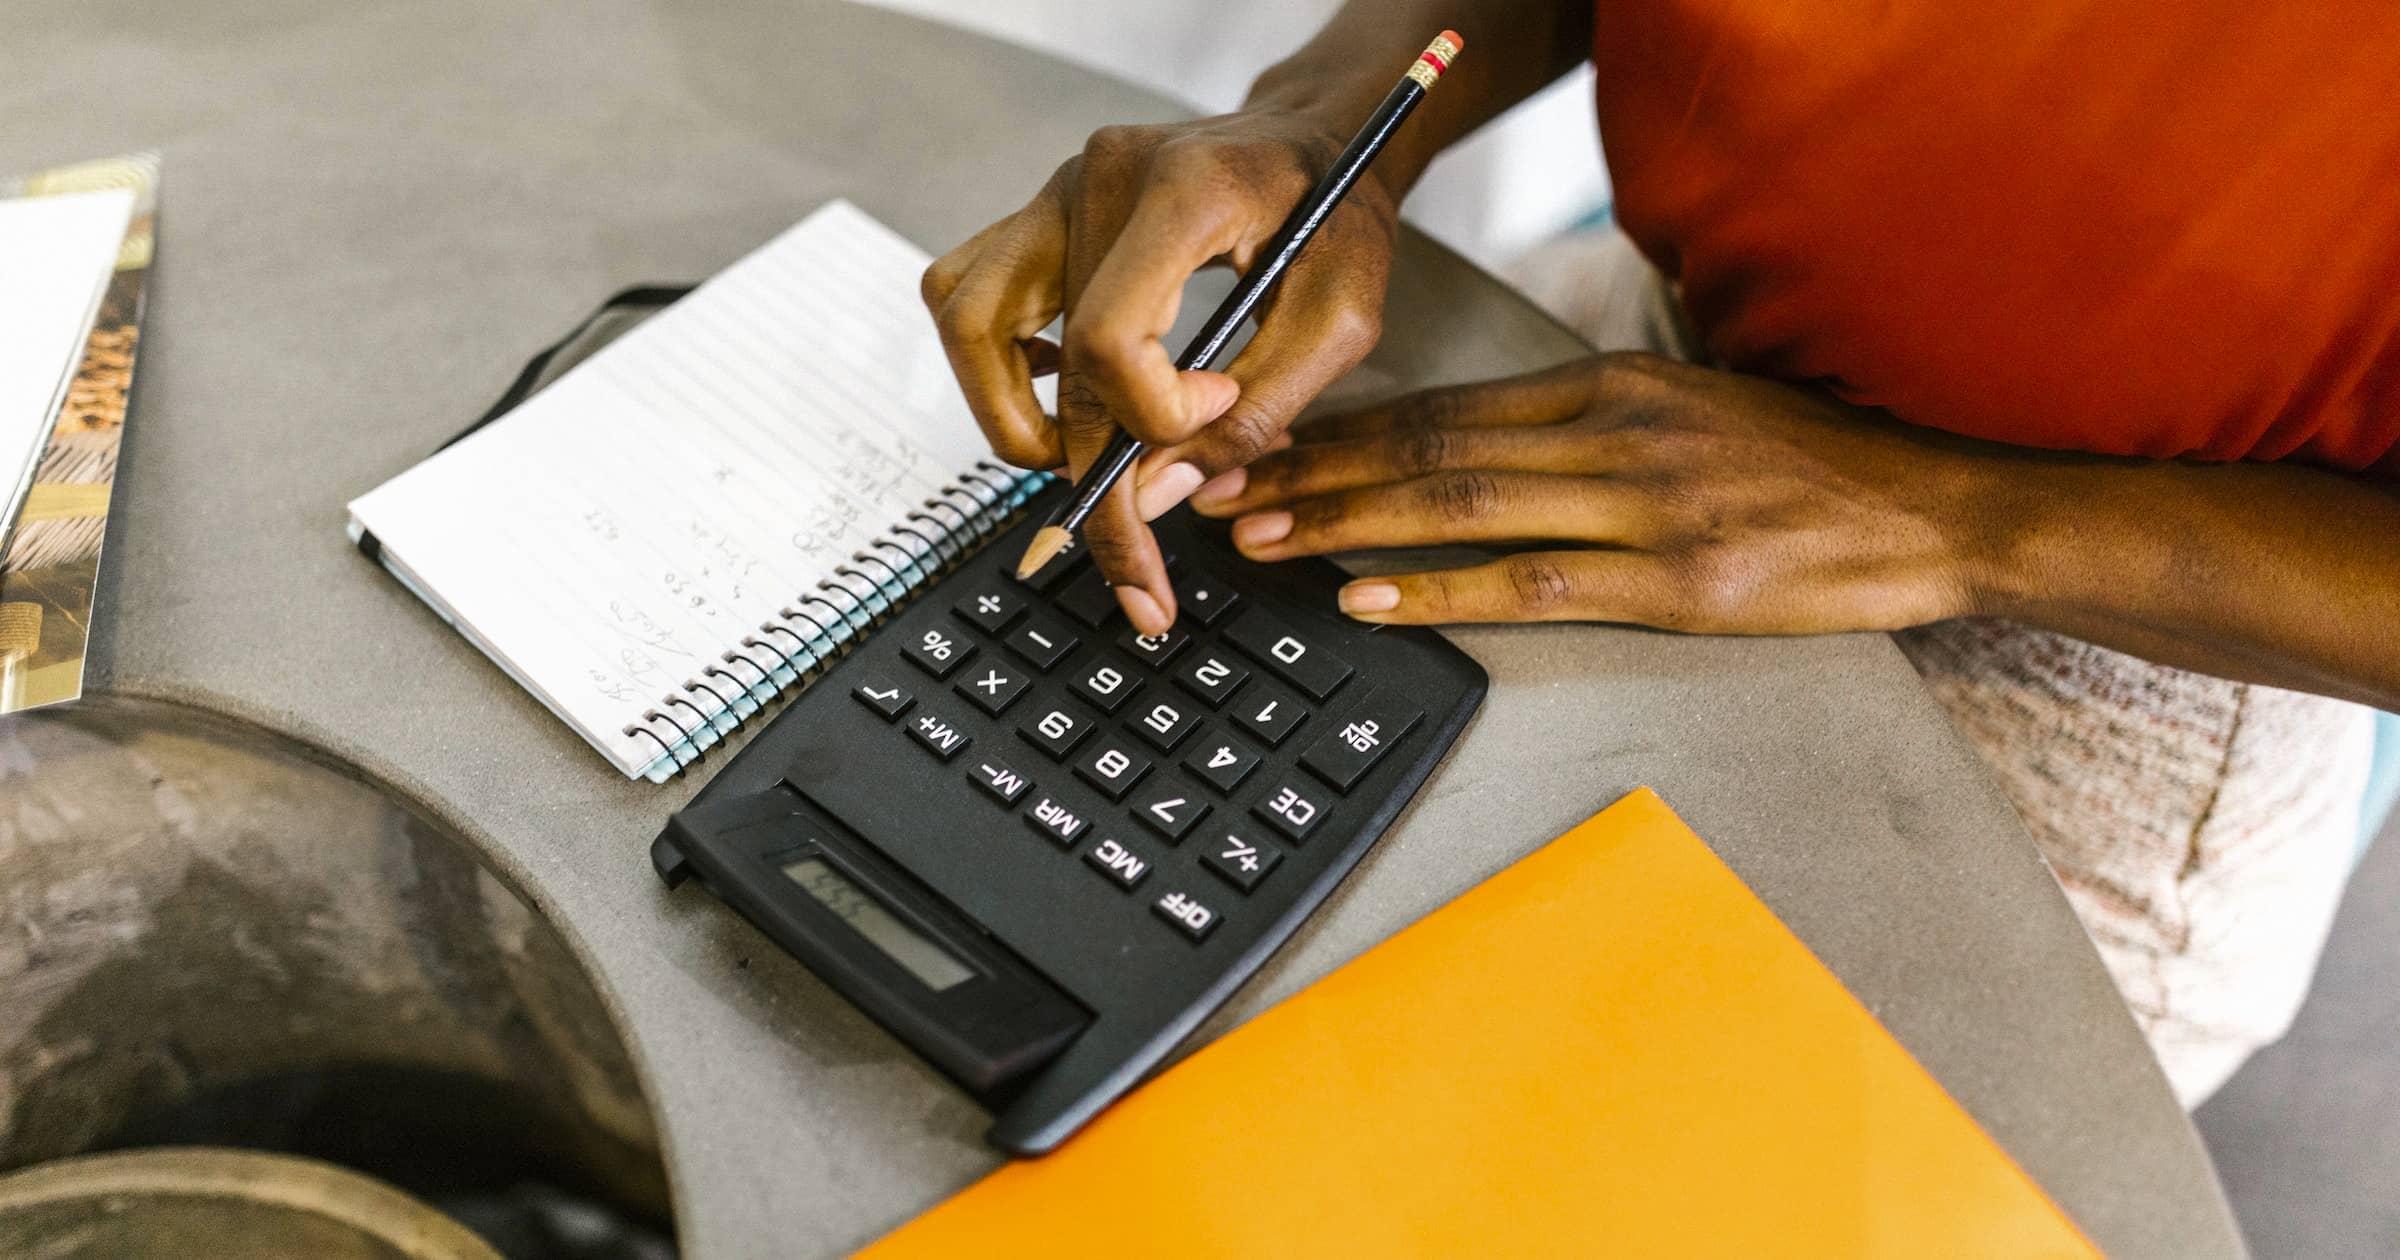 Hands using a calculator on a desk